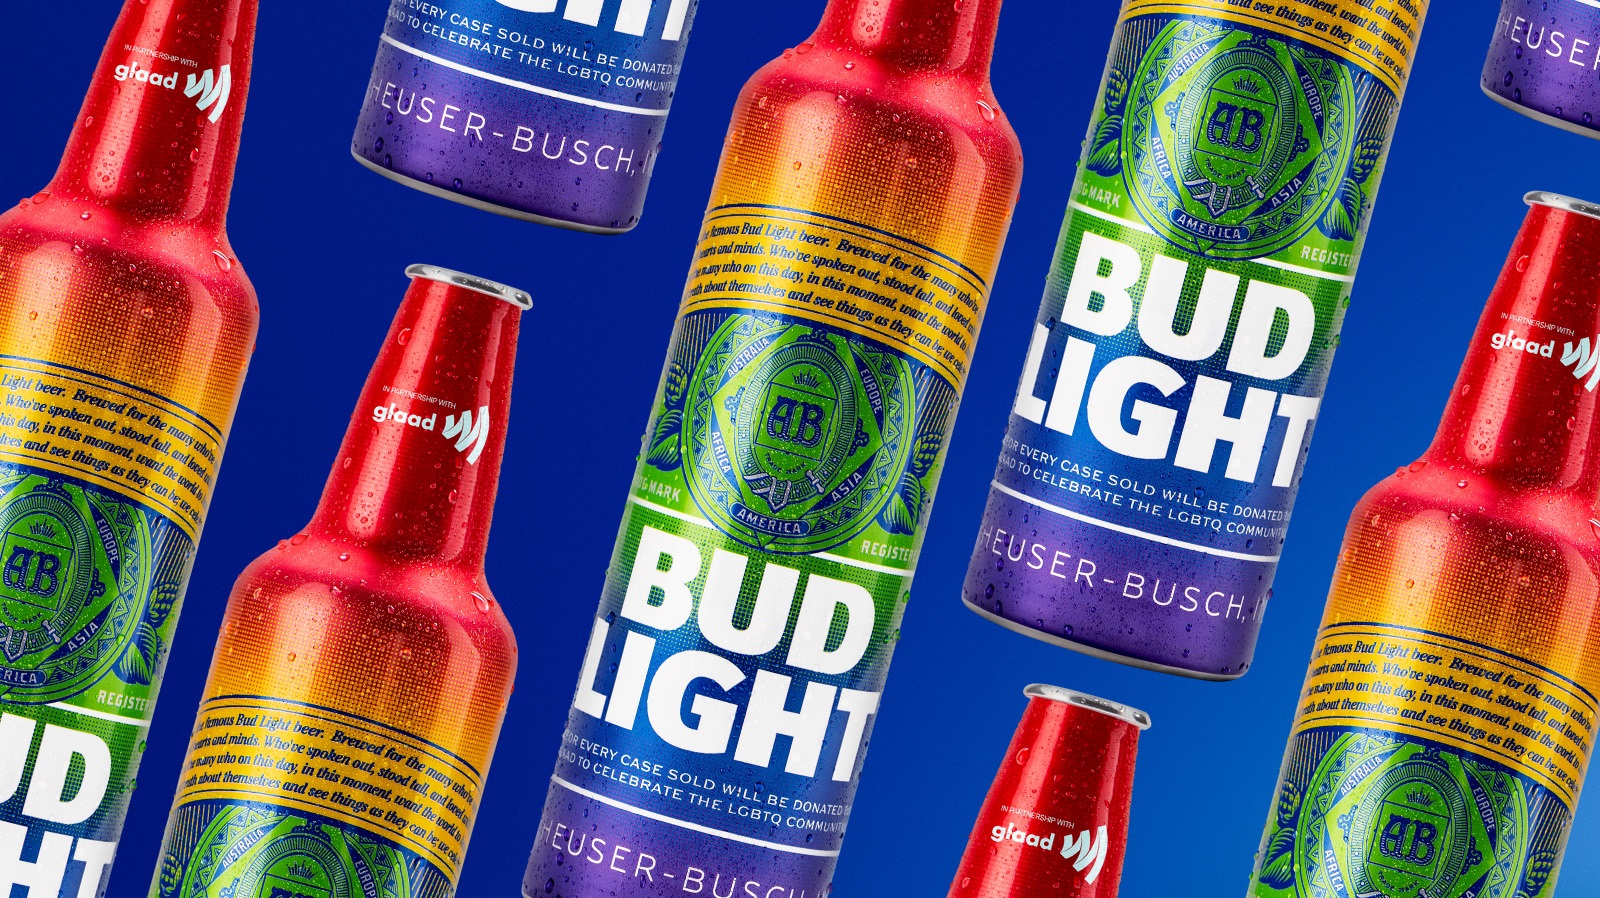 Bud Light Celebrates World Pride with Rainbow-Inspired Bottles Benefitting GLAAD